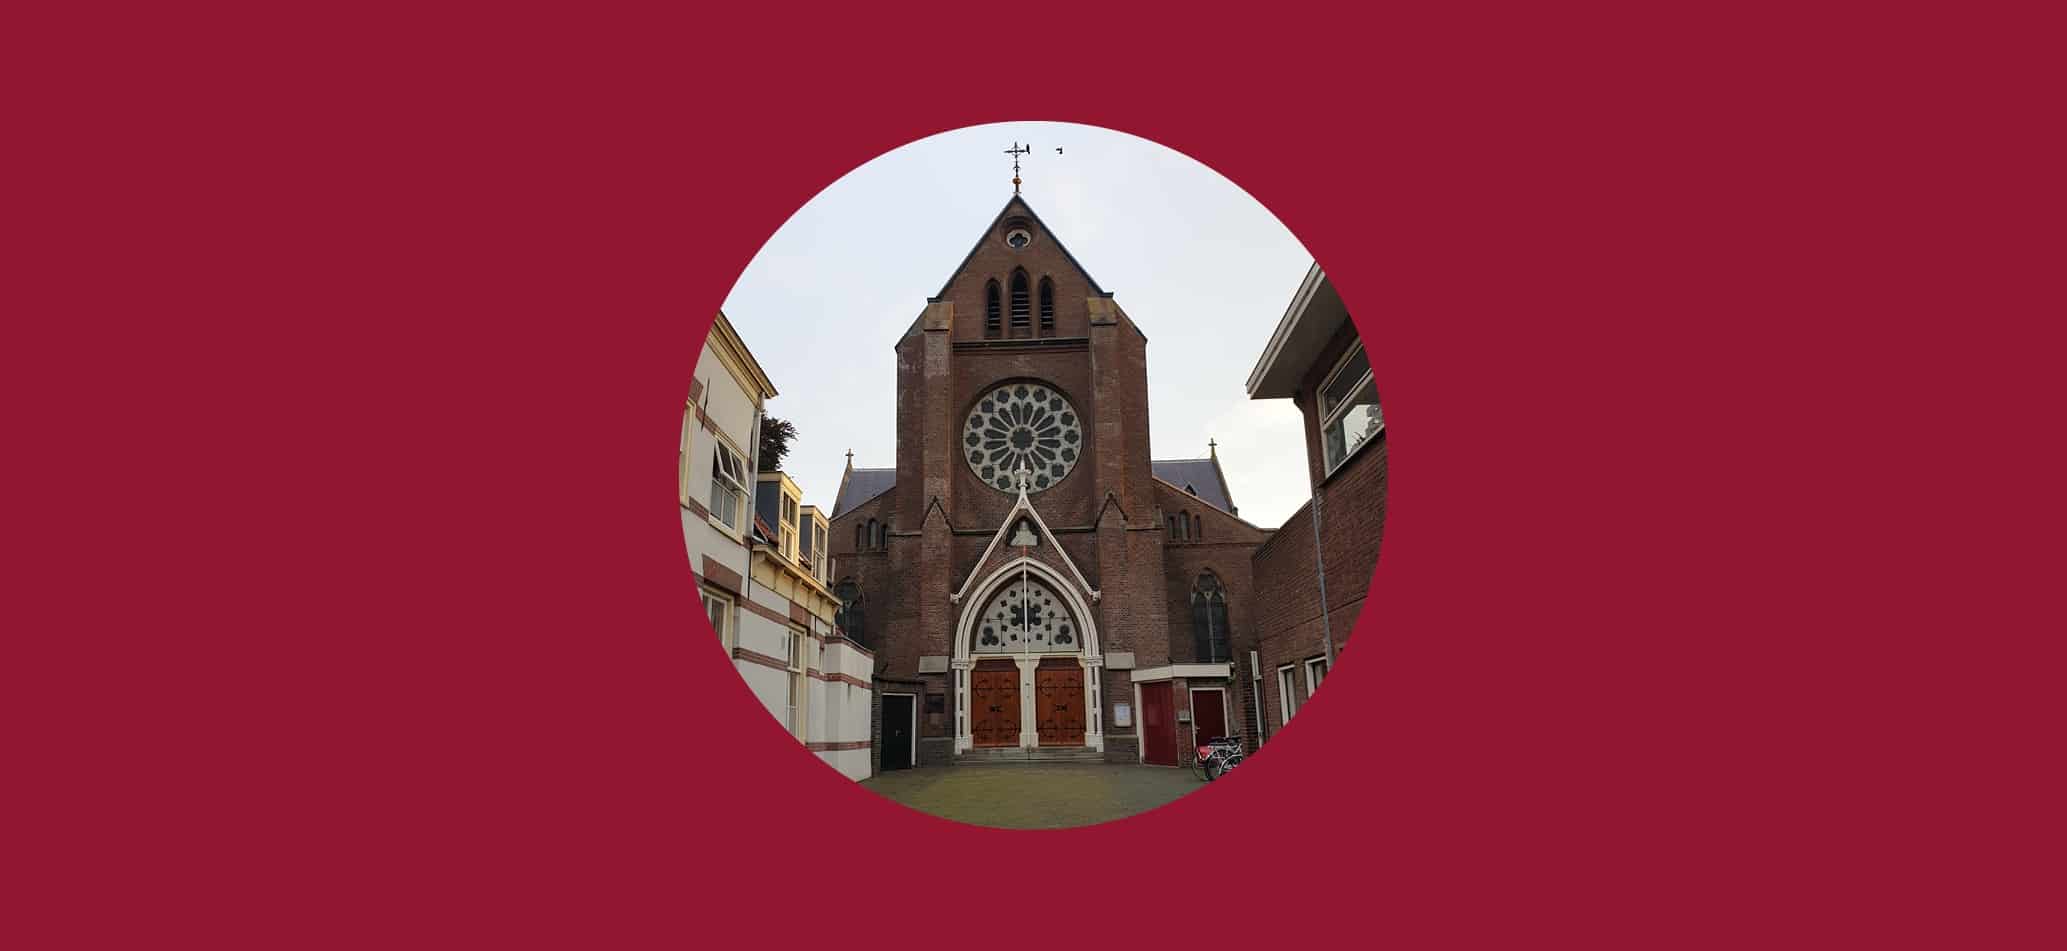 07-St. Laurentius Alkmaar